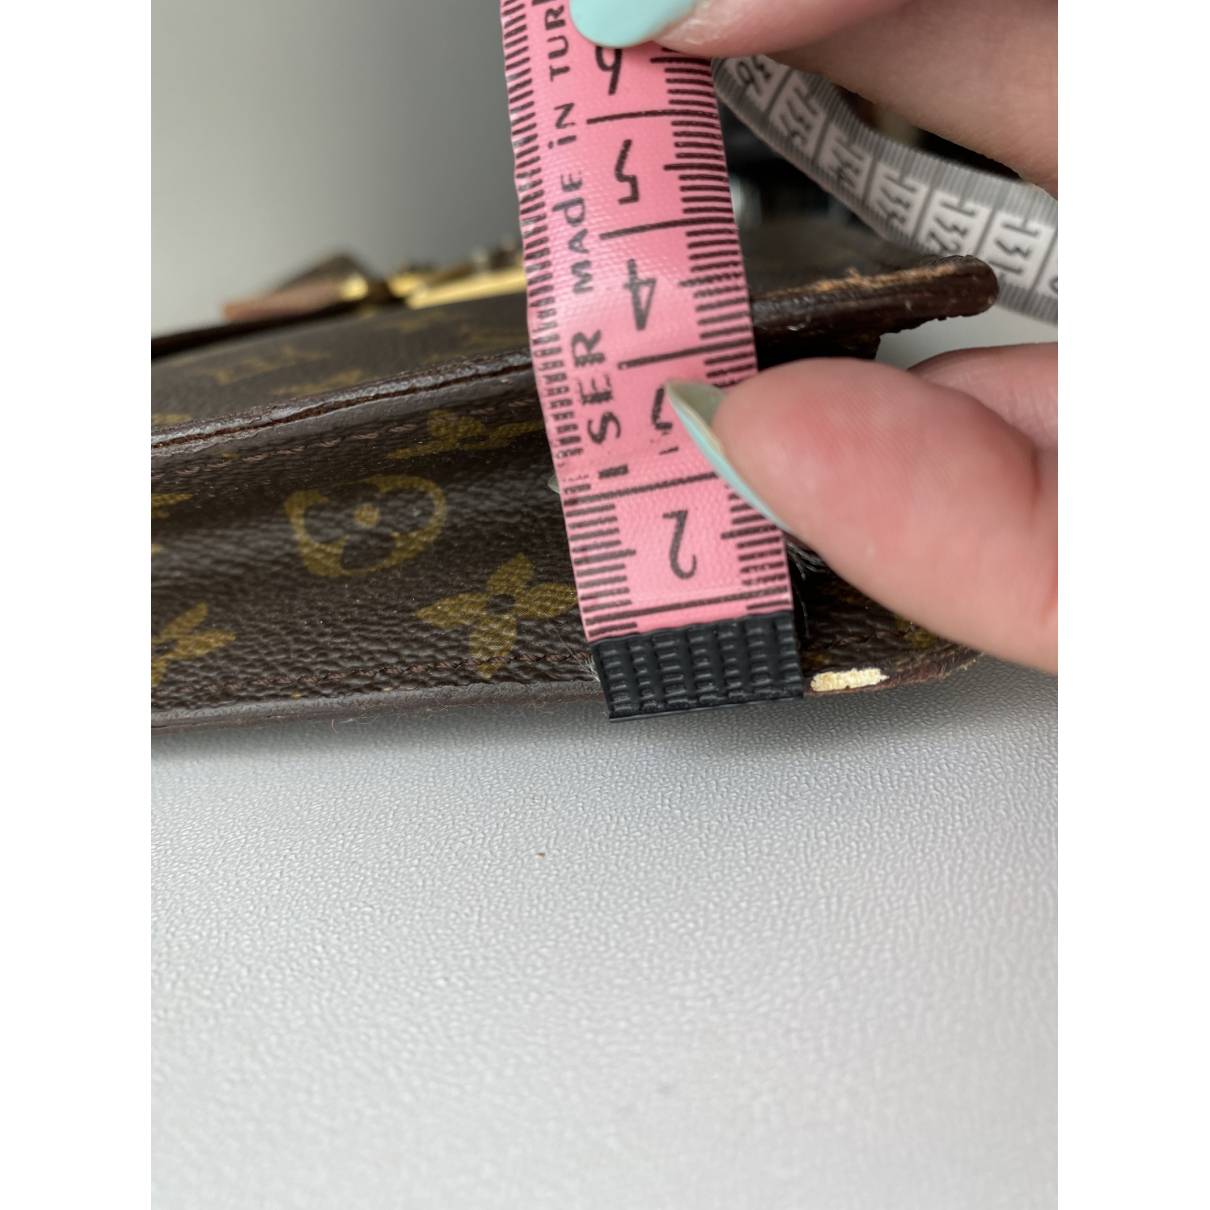 Louis Vuitton Monogram Strap Monogram Adjustable Shoulder Strap 16mm